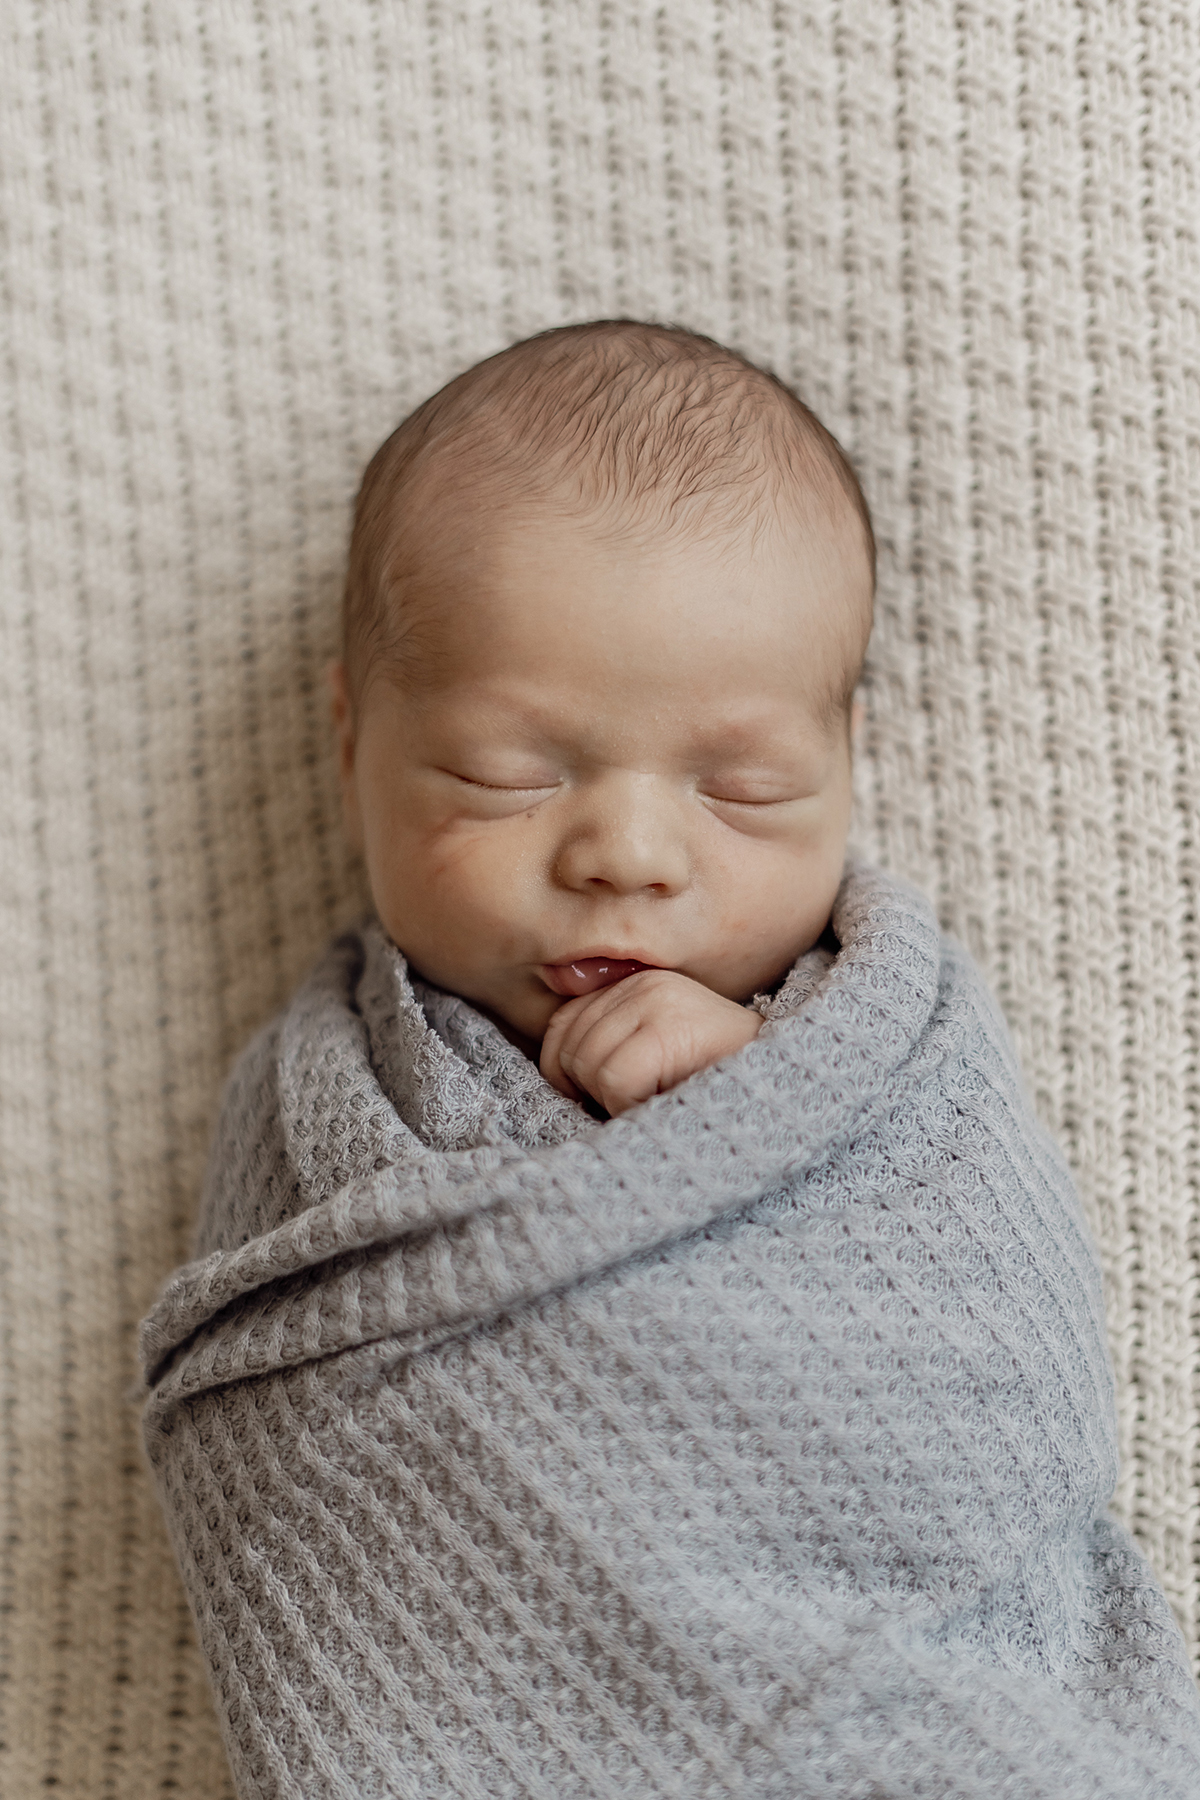 Newborn baby sleeping swaddled in grey blanket